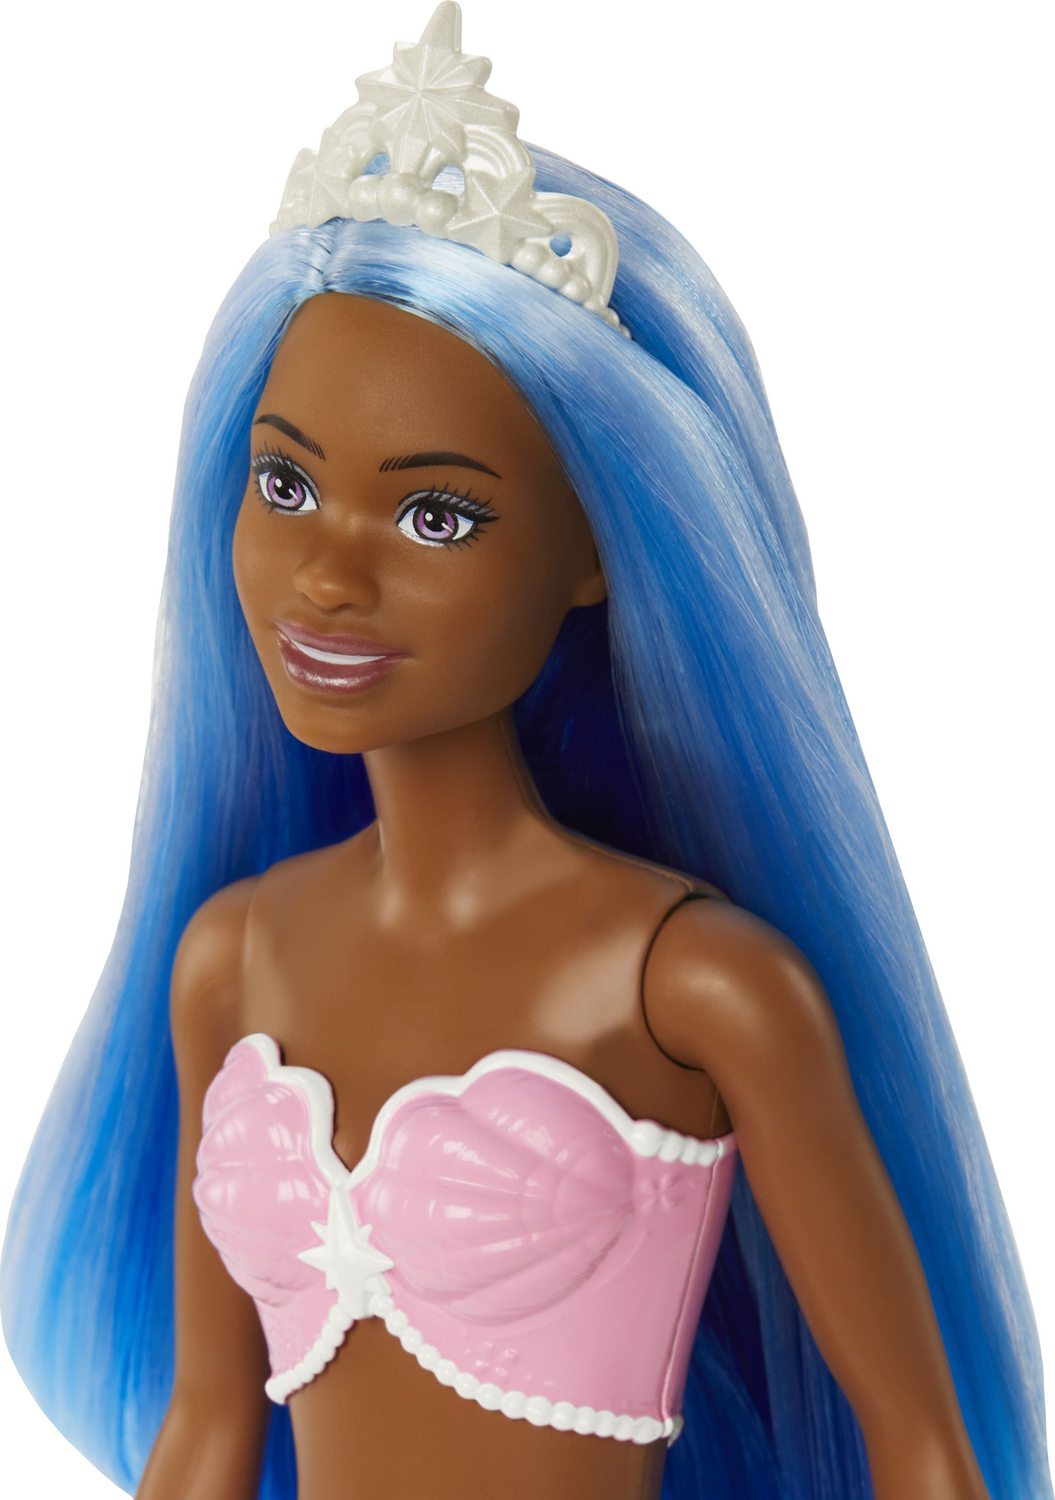 Barbie Mermaid Dreamtopia Doll